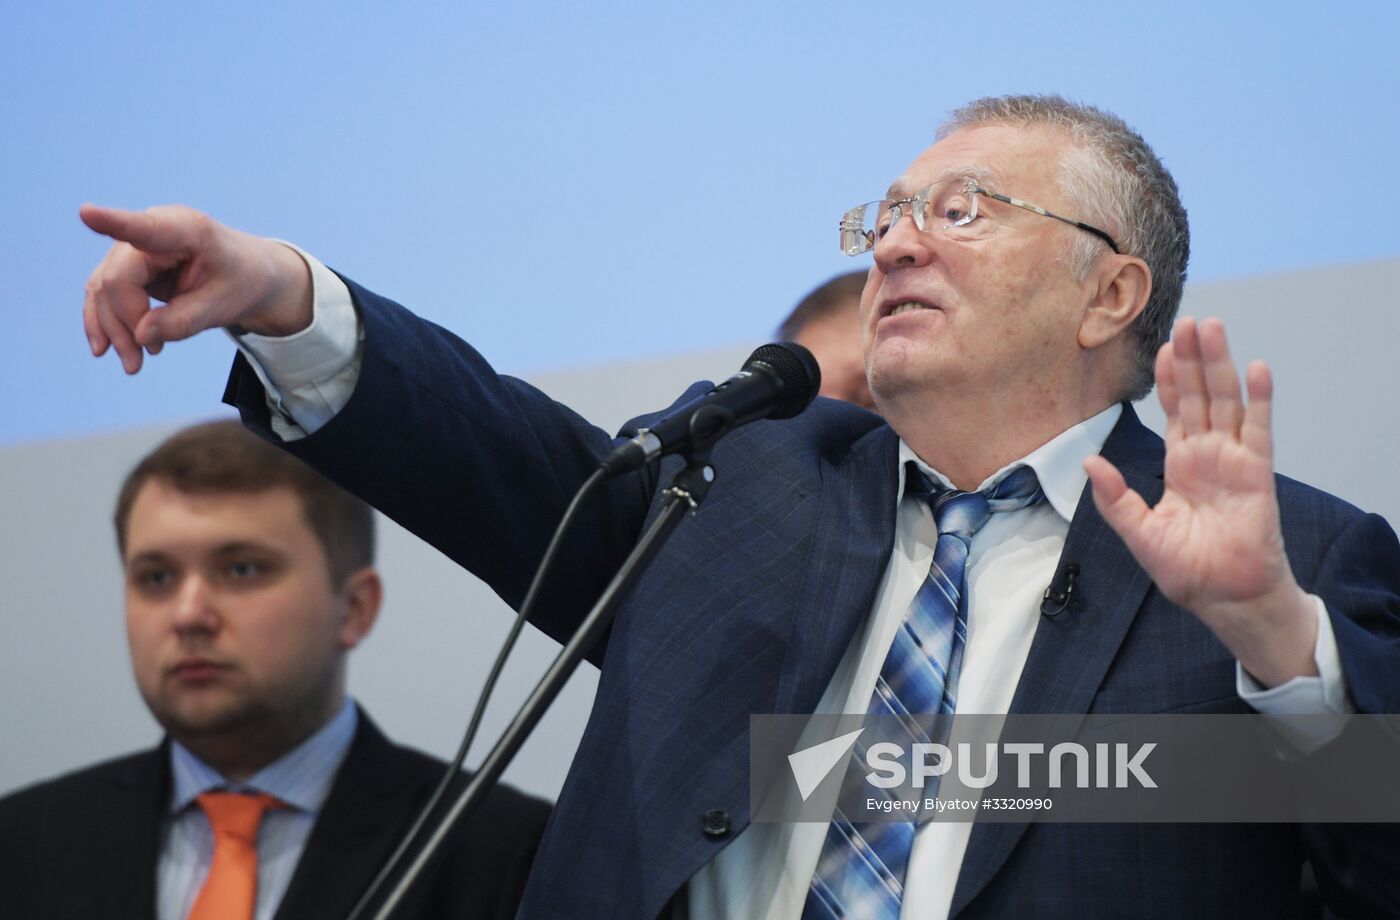 Presidential candidate Vladimir Zhirinovsky speaks at LDPR headquarters